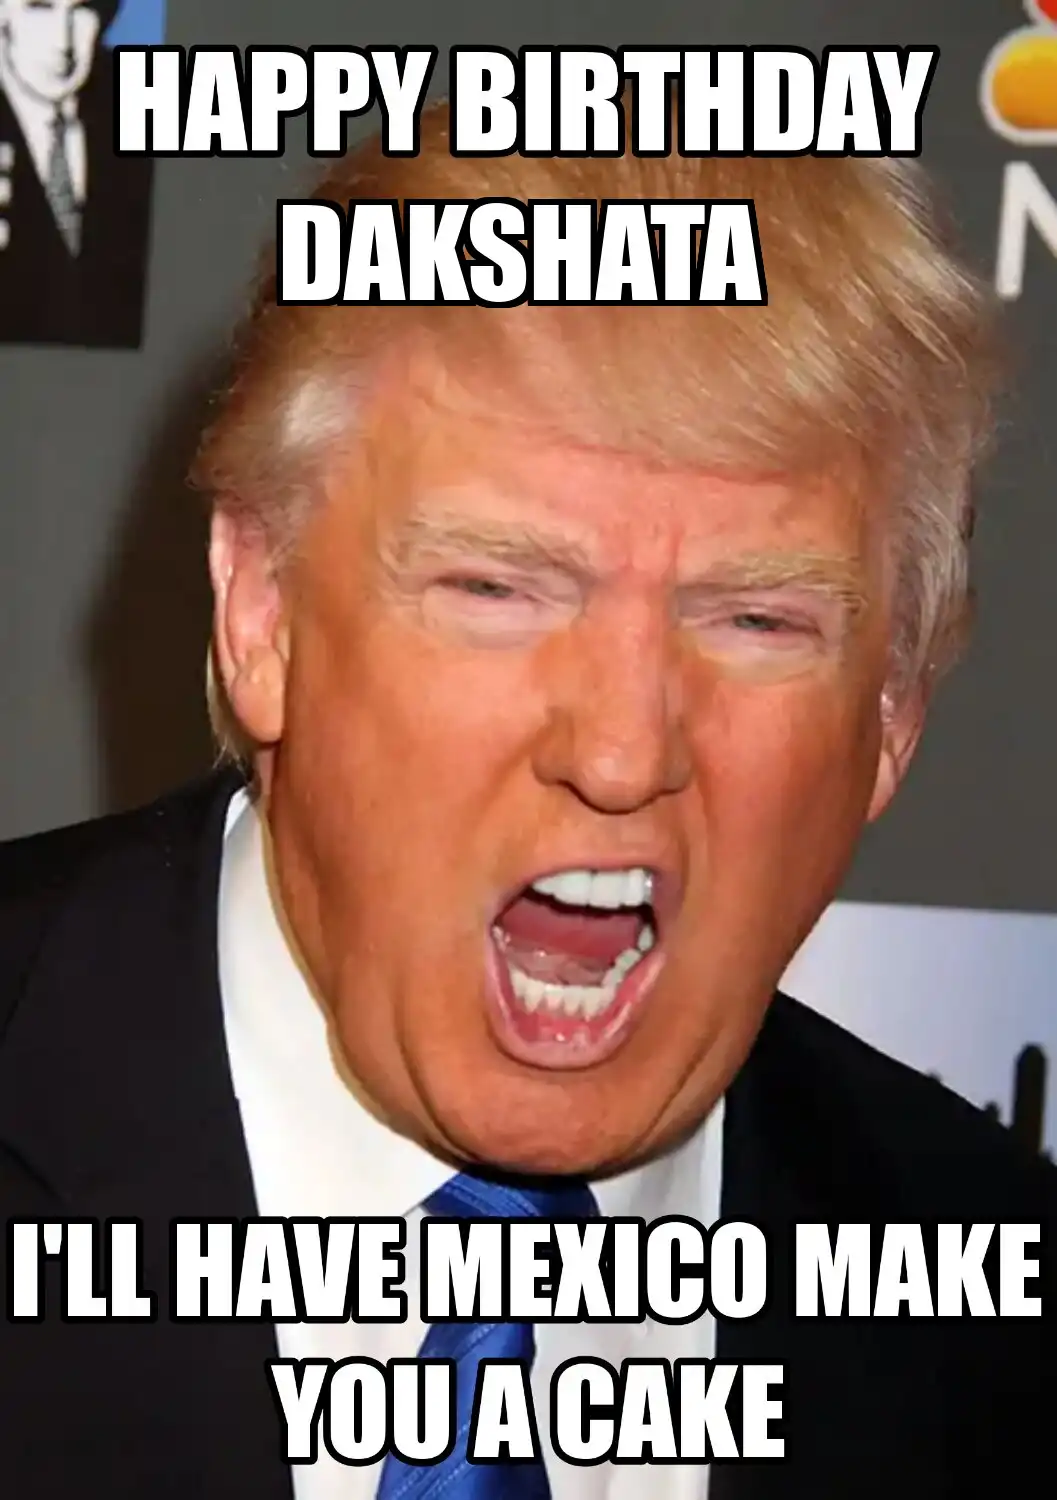 Happy Birthday Dakshata Mexico Make You A Cake Meme